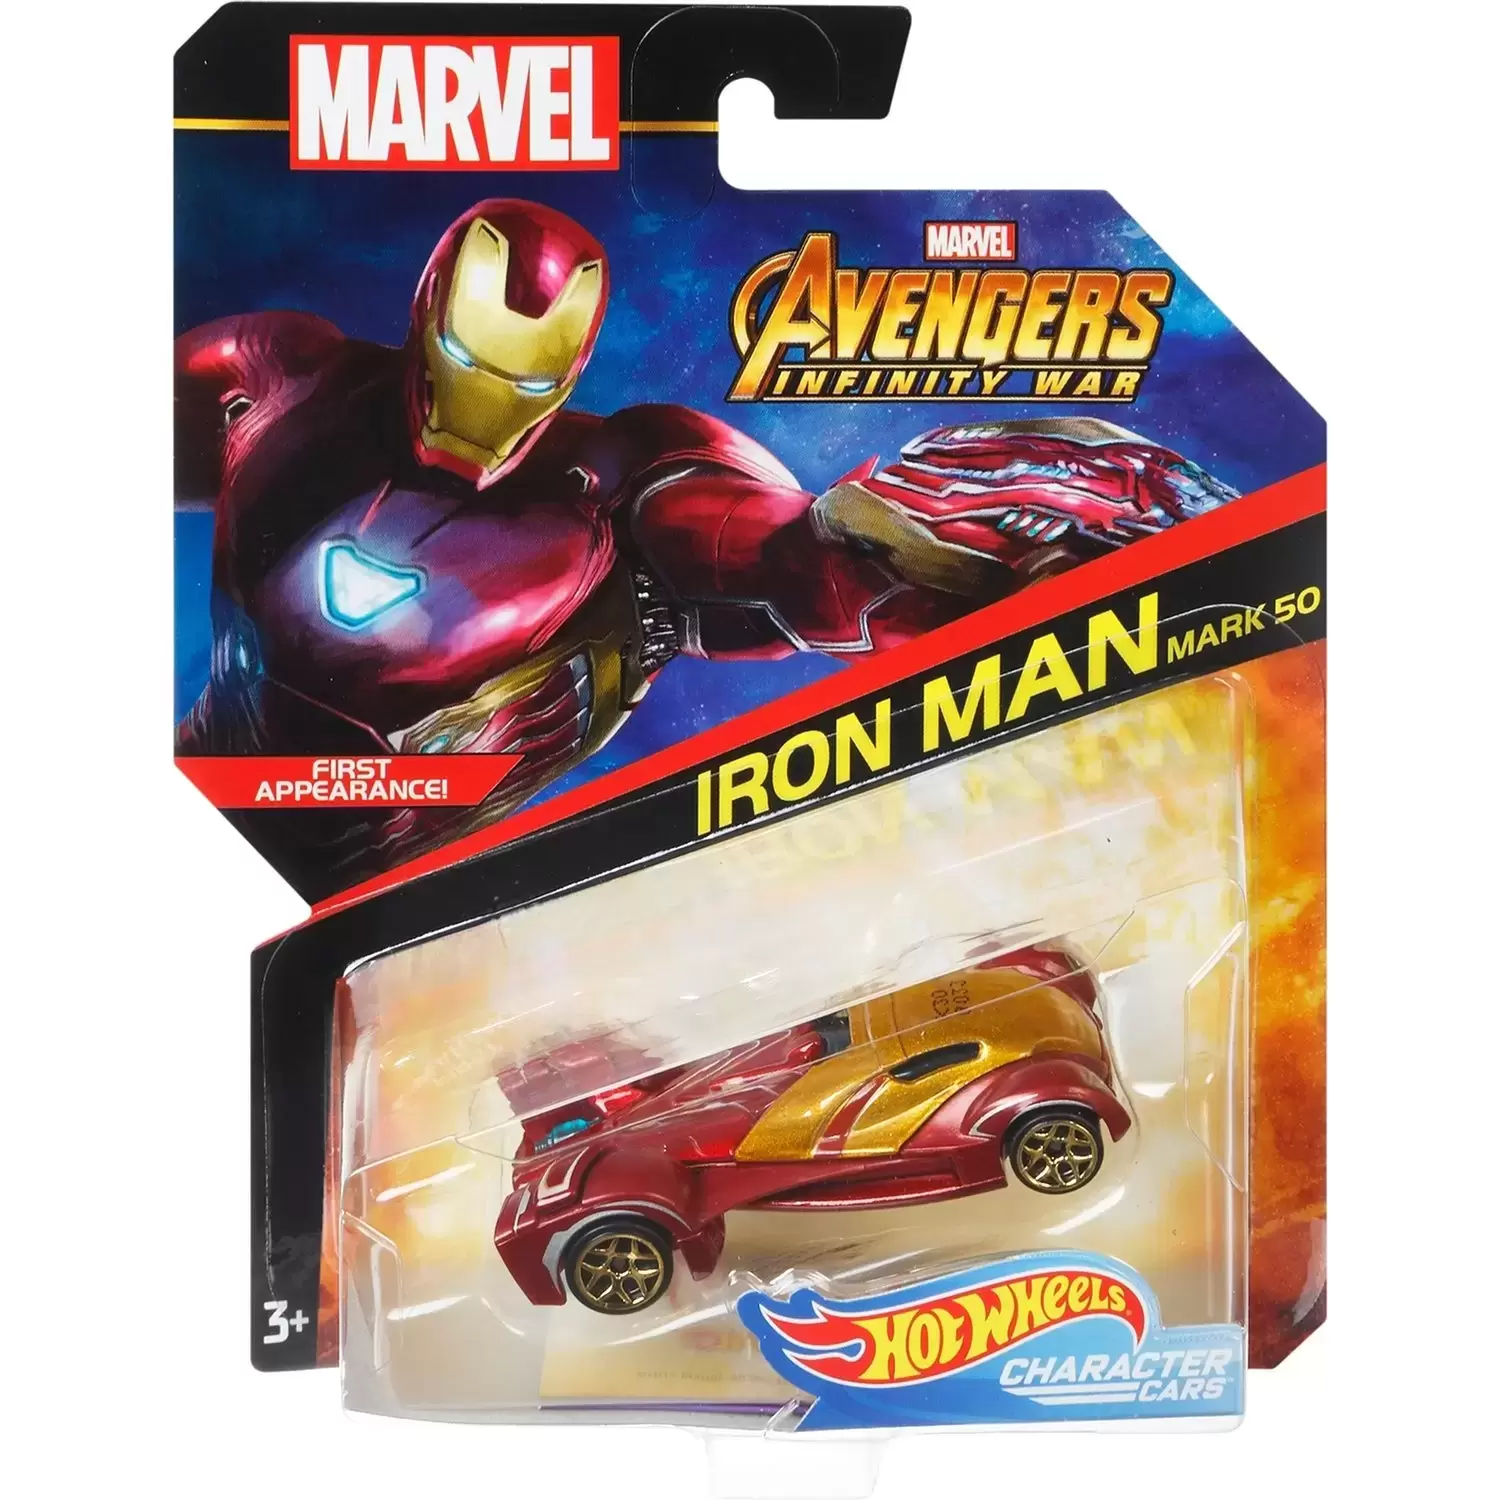 Marvel Character Cars - Avengers Infinity Wars - Iron Man Mark 50